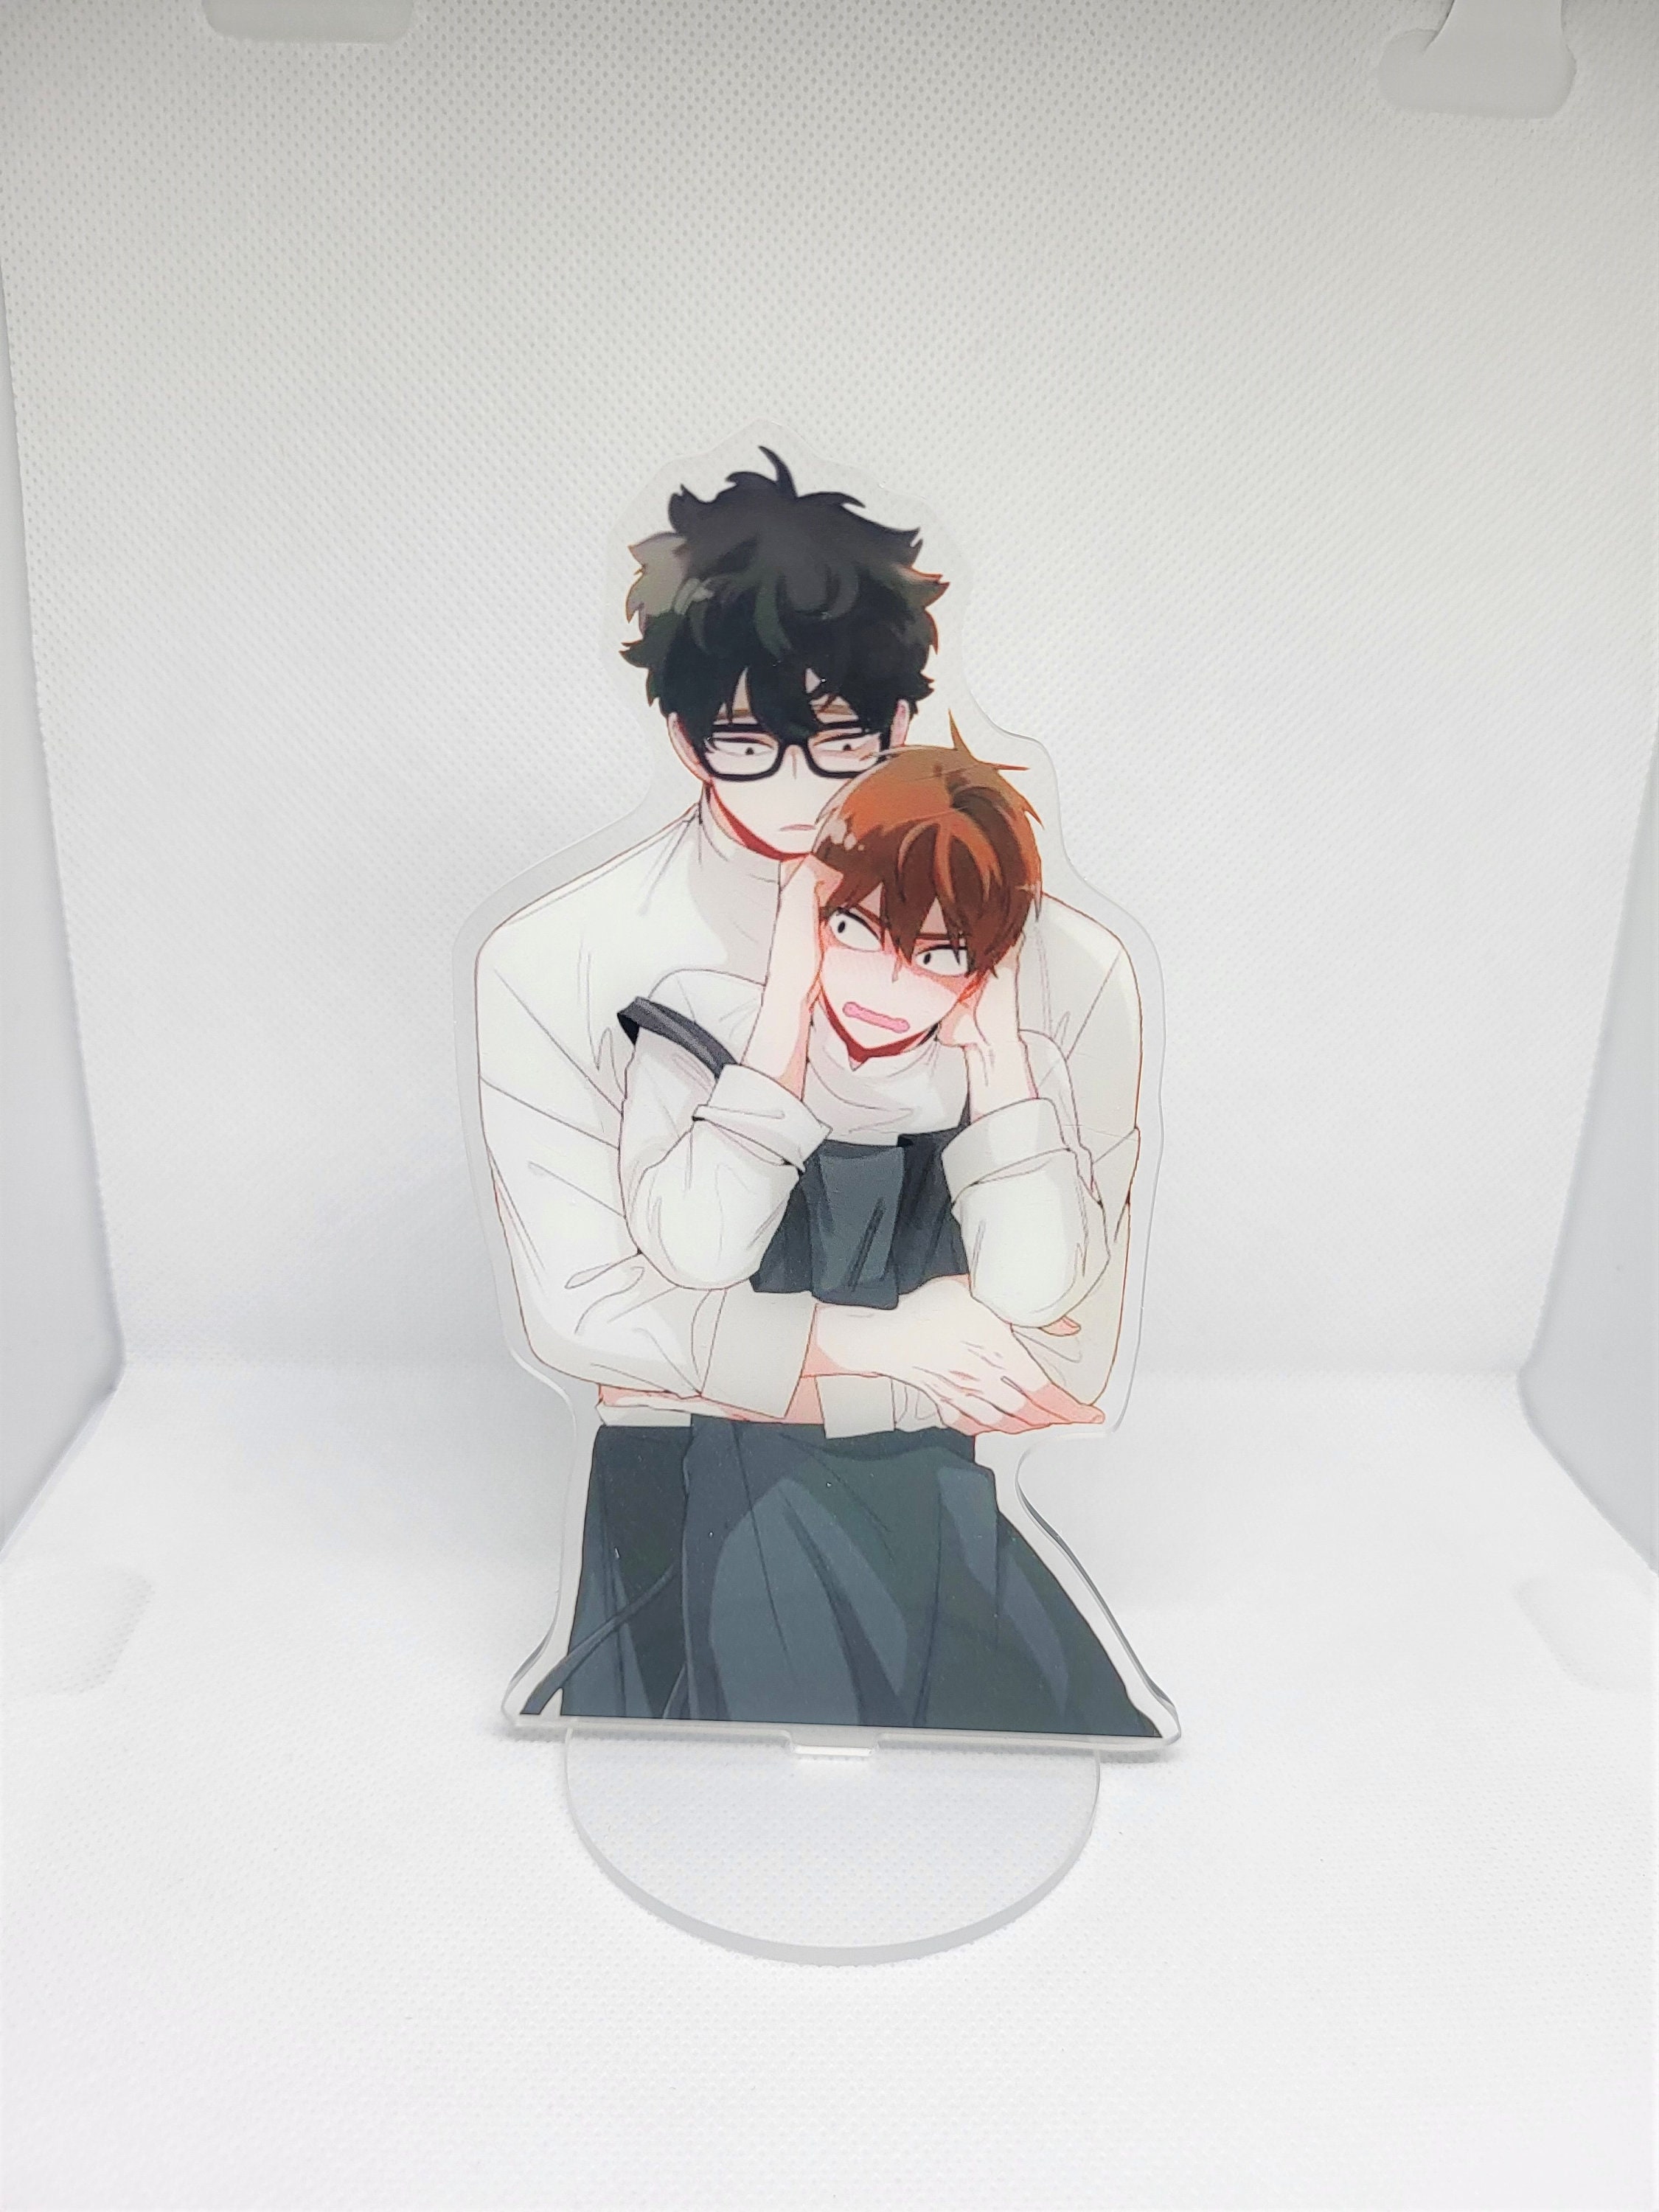 Kiss In Bed anime manga fanart gay yaoi lgbt | Photographic Print